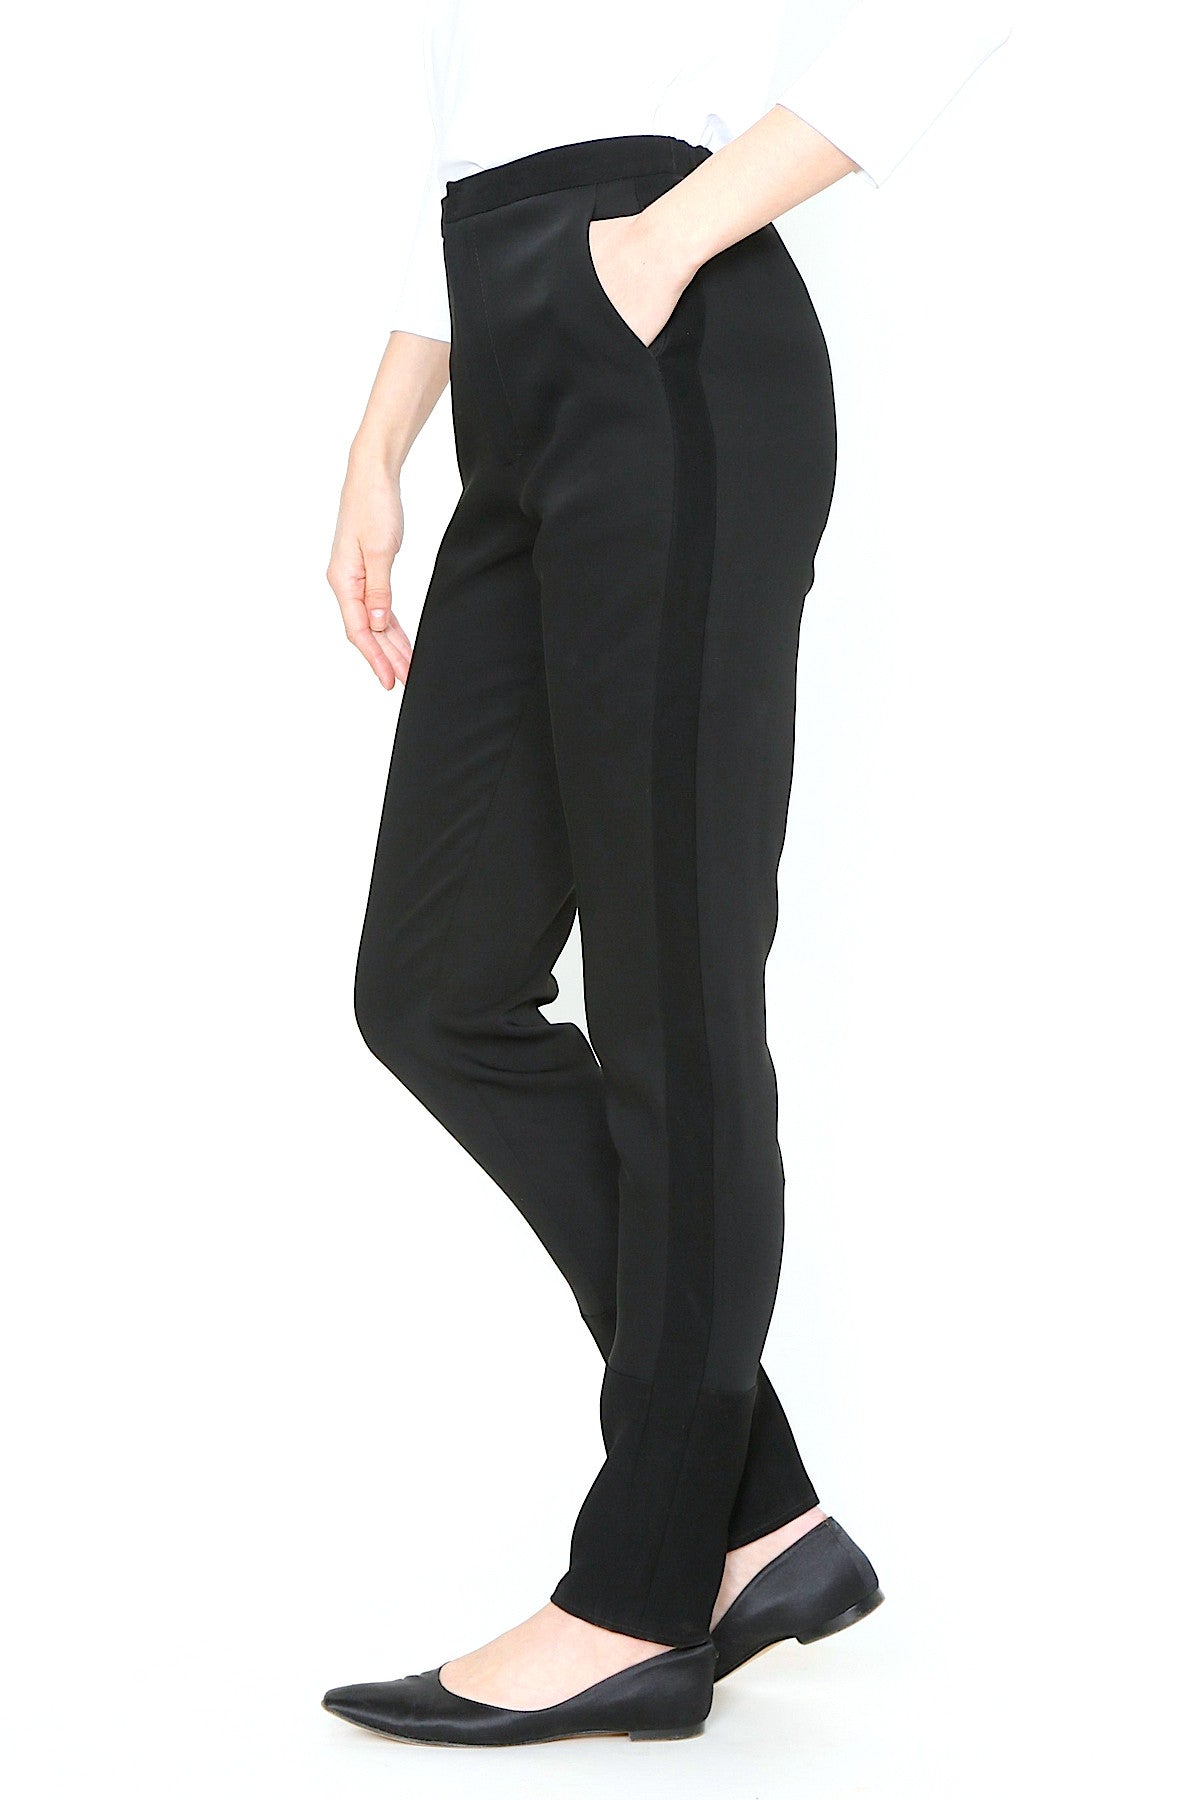 Men's Black, Adjustable-Waist, Pleated Front Tuxedo Pants with Satin Stripe  - 99tux